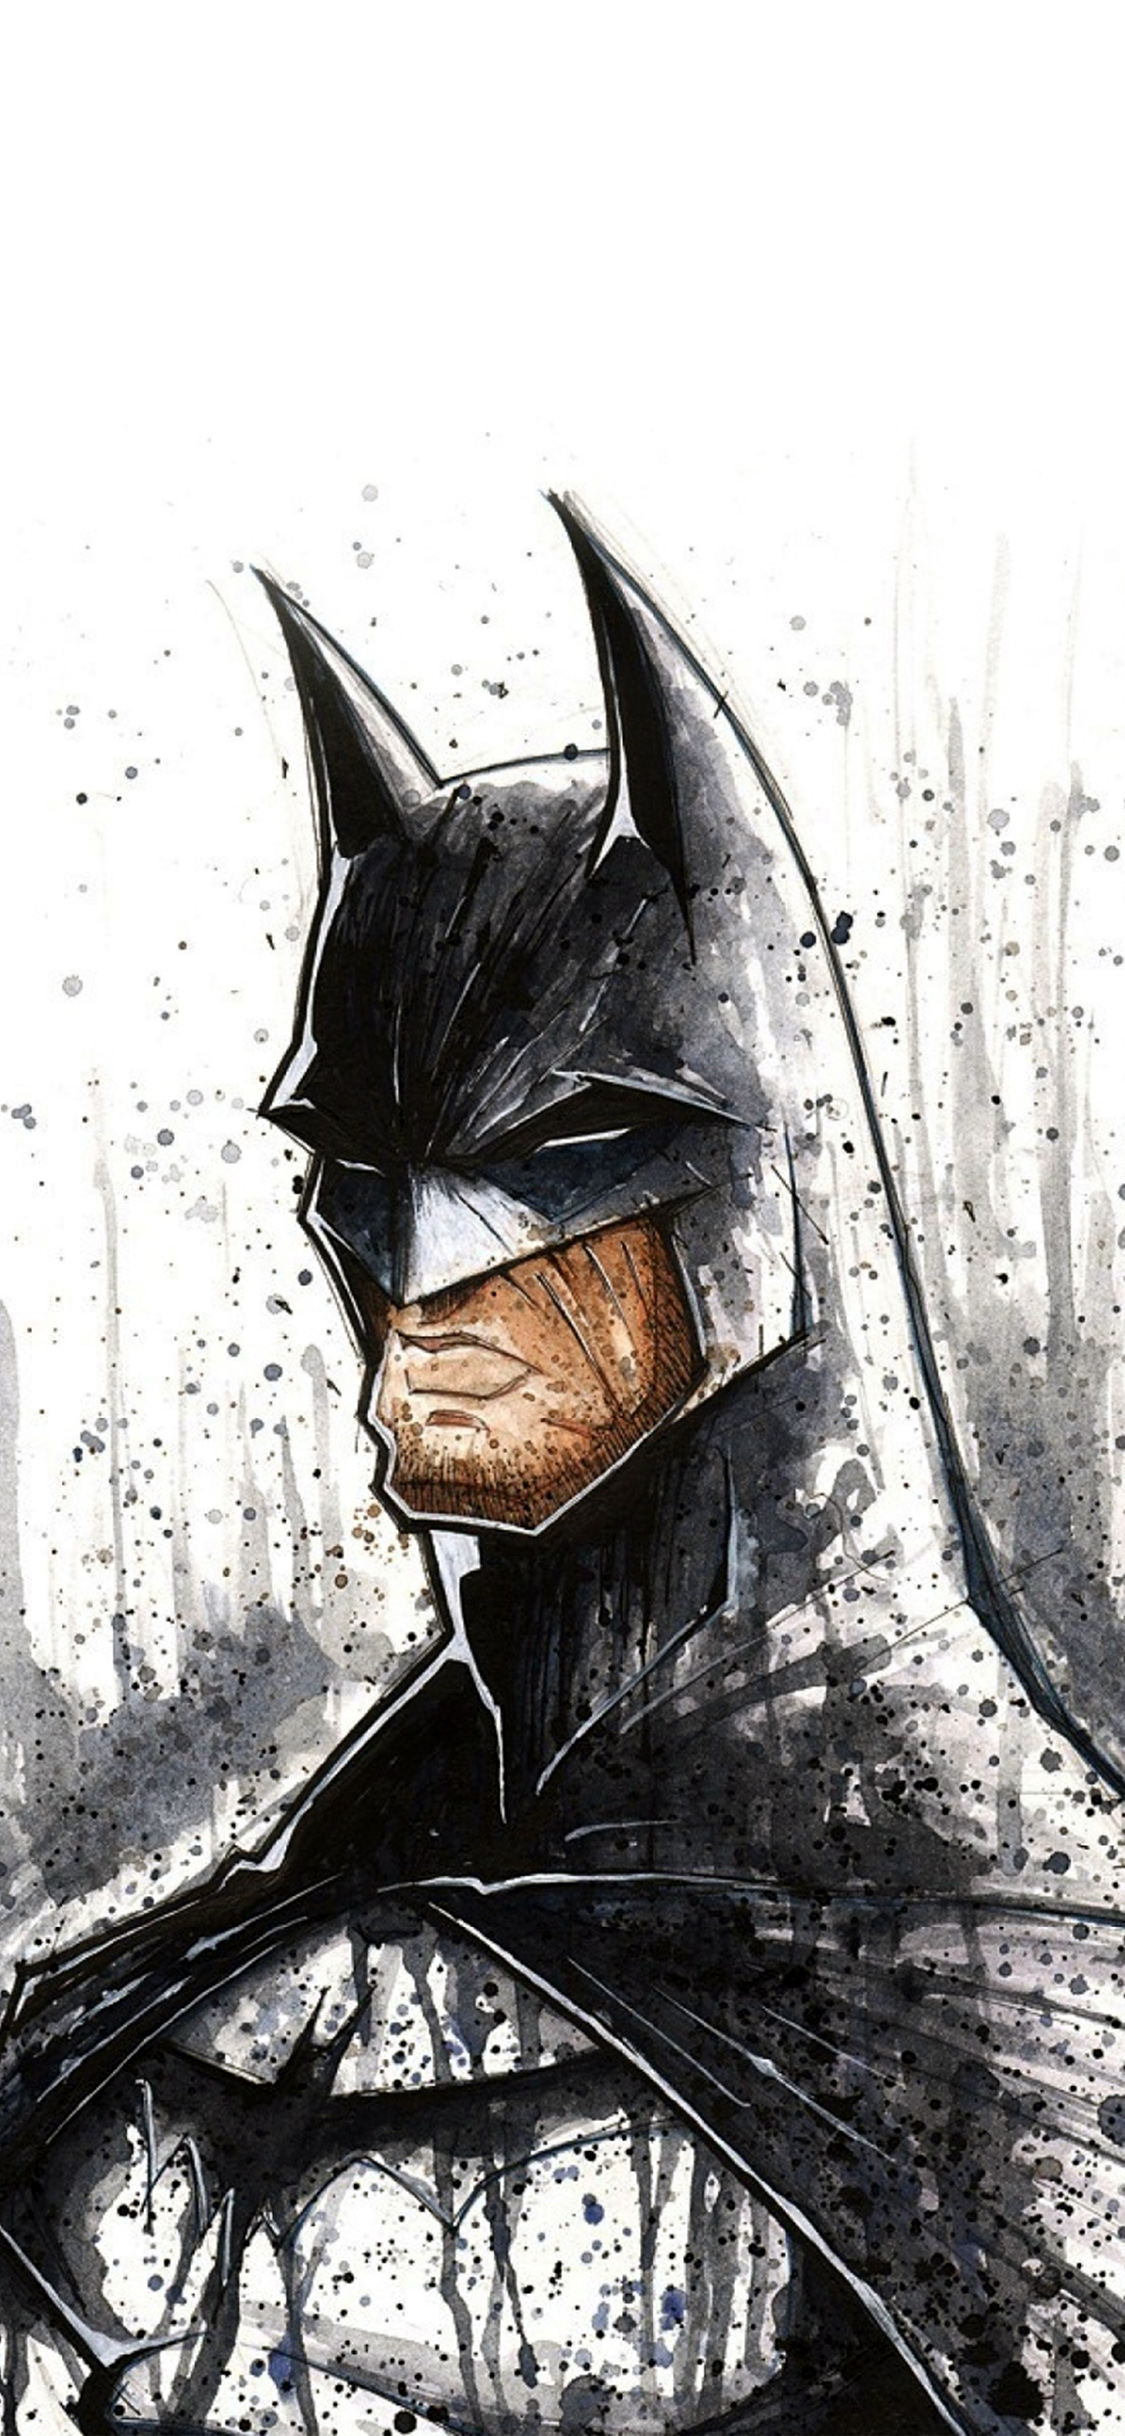 iPhone X wallpaper. batman face painting hero art illustration